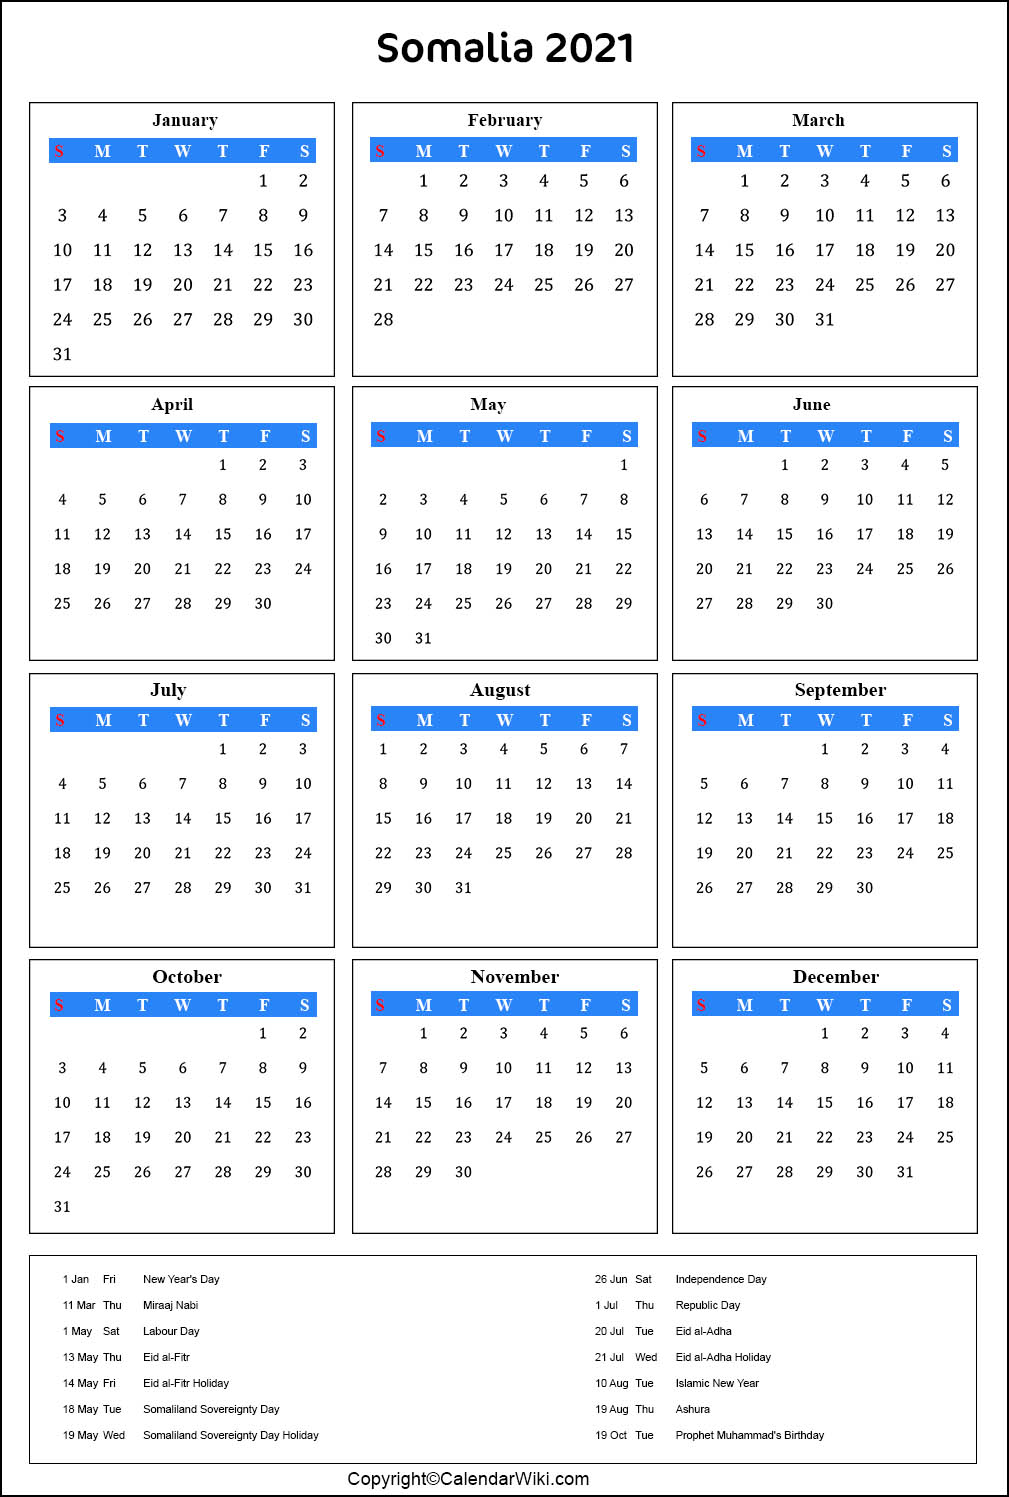 Somalia Calendar 2021